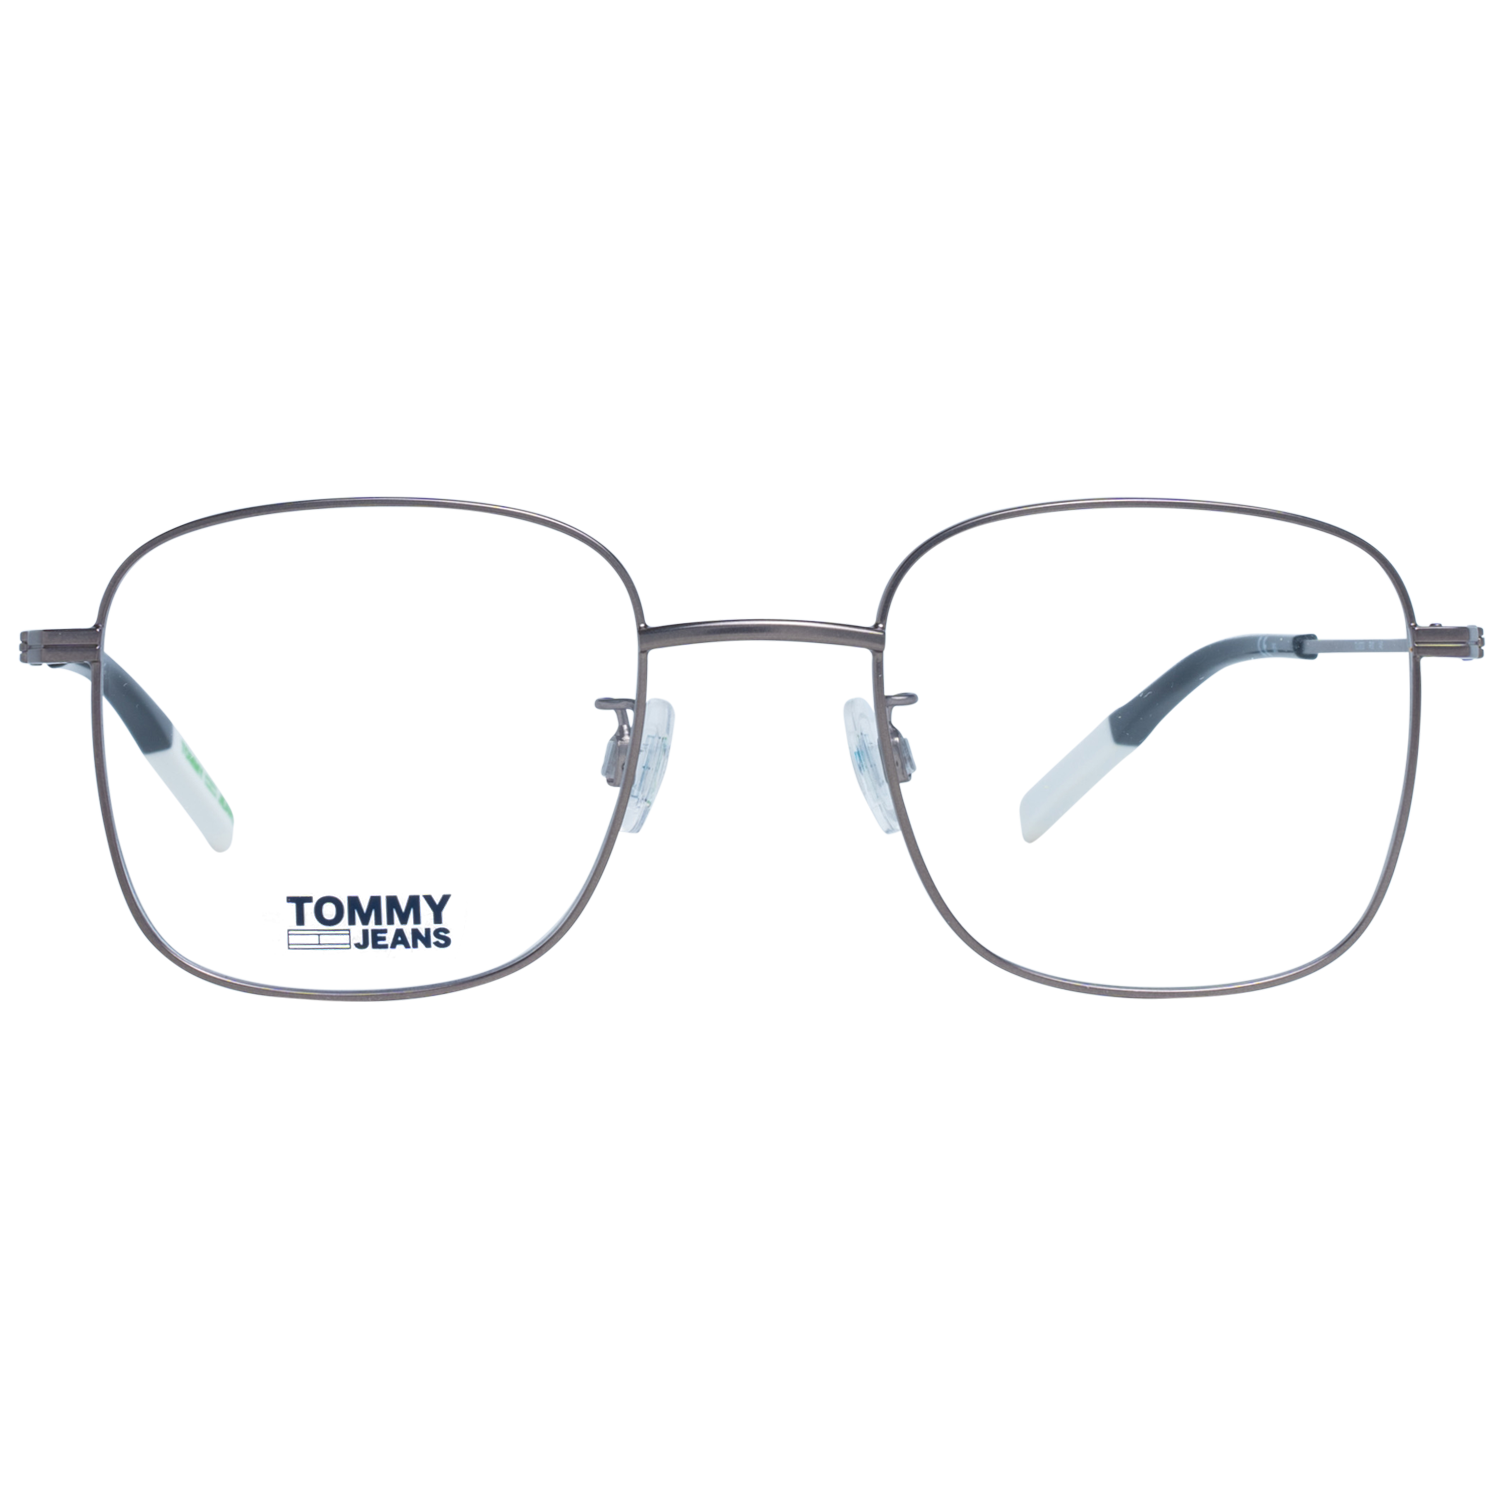 Tommy Hilfiger Frames Tommy Hilfiger Optical Frame TJ 0032 R80 49 Eyeglasses Eyewear UK USA Australia 